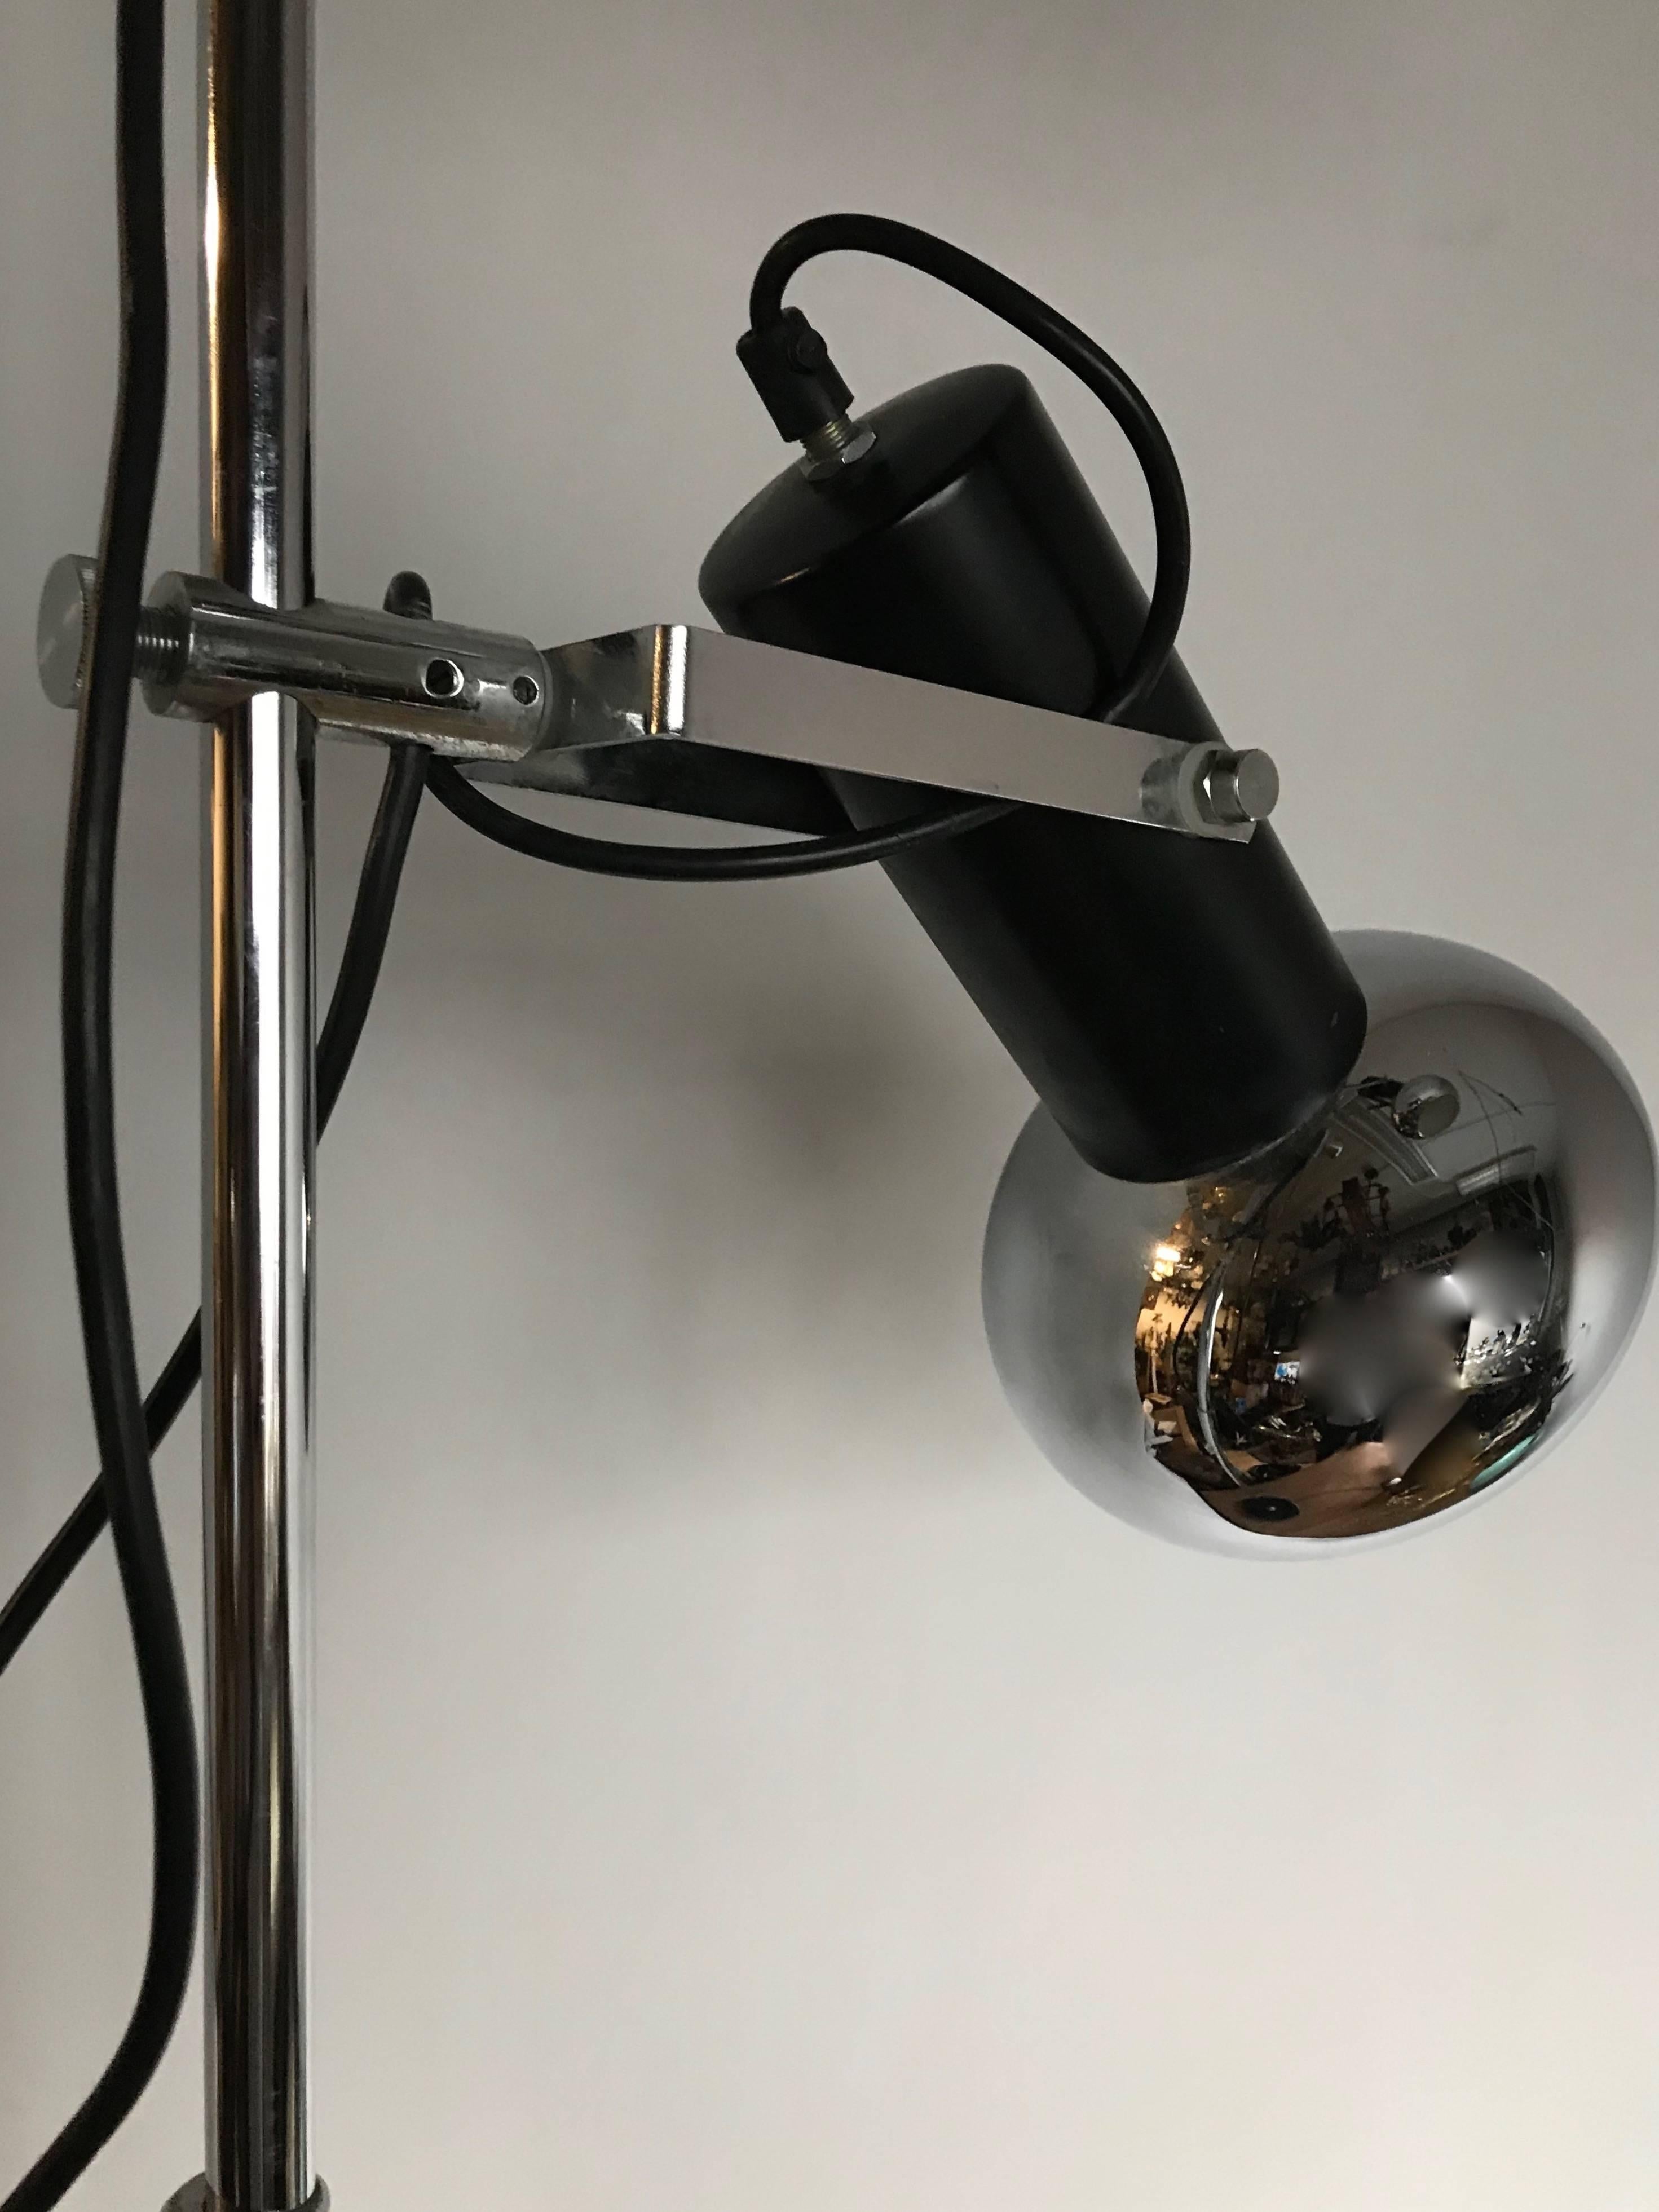 Dutch Vintage, Midcentury Design Double Spotlight Chrome and Black Painted Floor Lamp